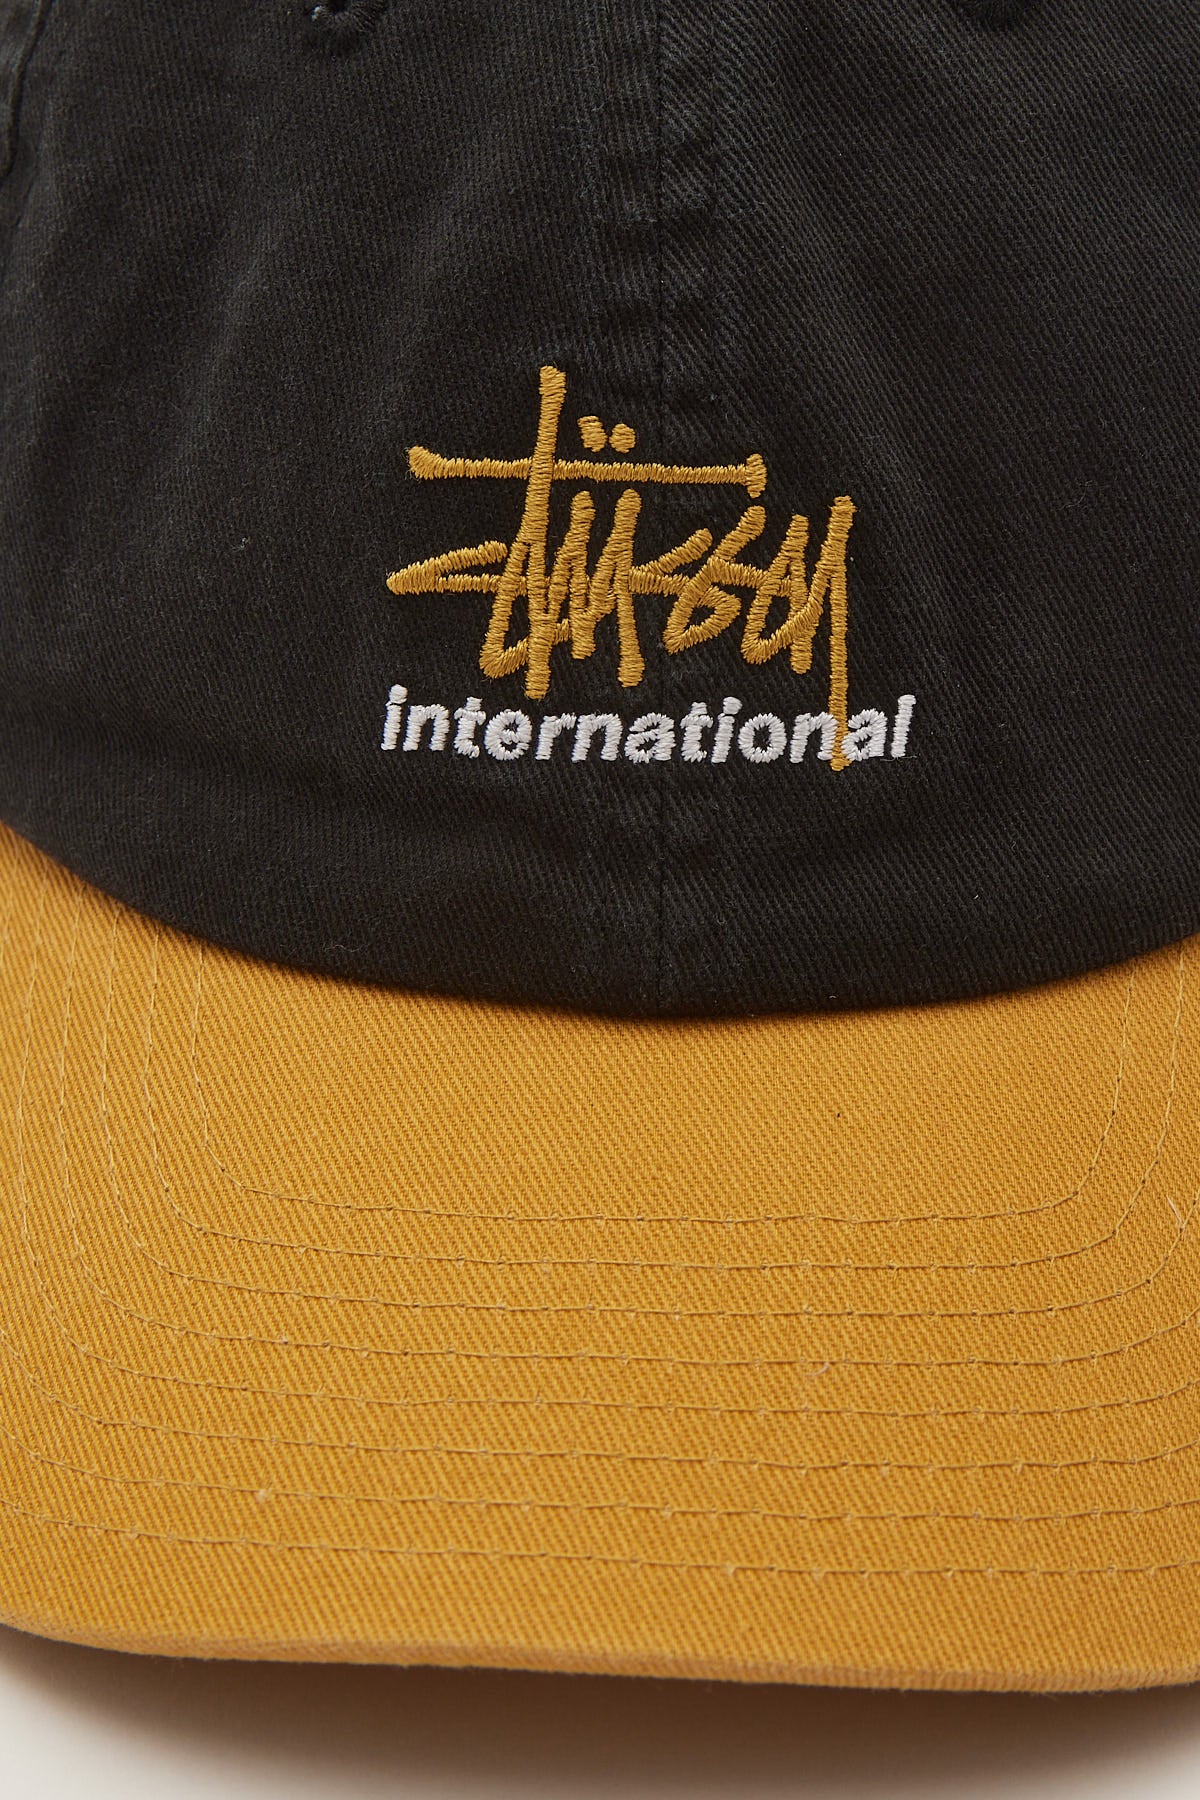 Stussy International Low Pro Cap Black/Yellow